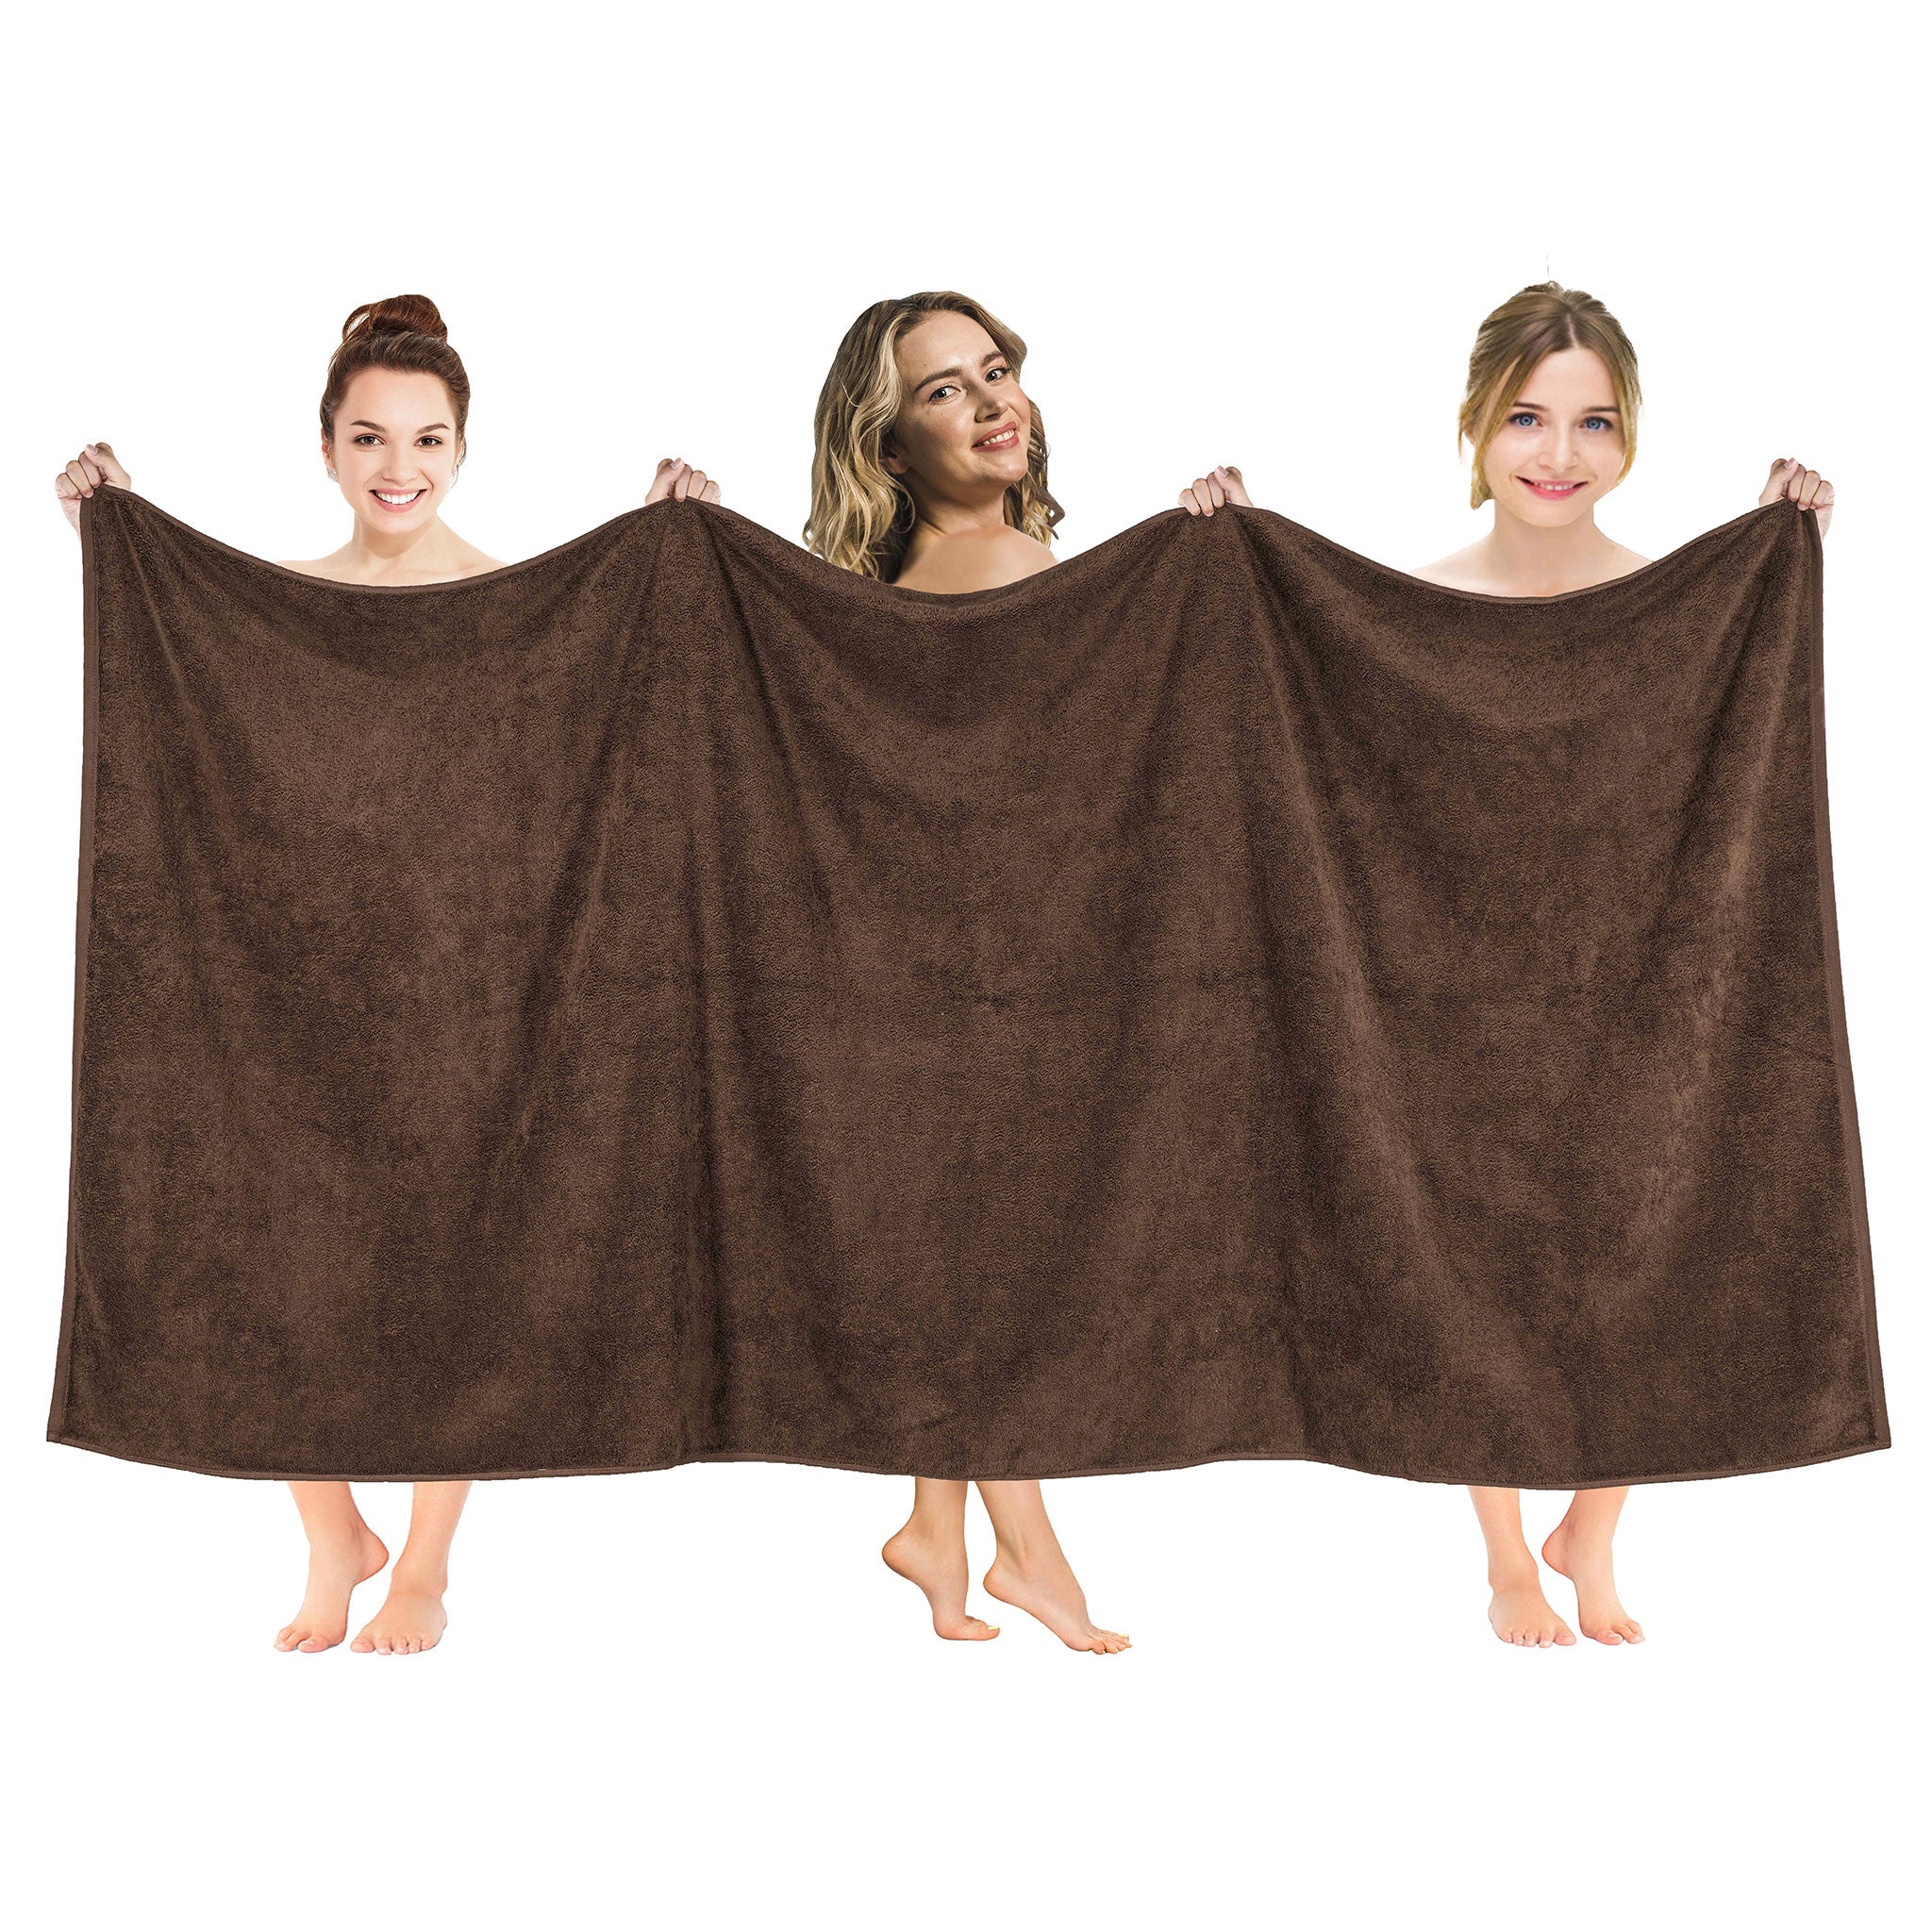 American Soft Linen - 40x80 Inch Oversized Bath Sheet Turkish Bath Towel - 12 Piece Case Pack - Chocolate-Brown - 1